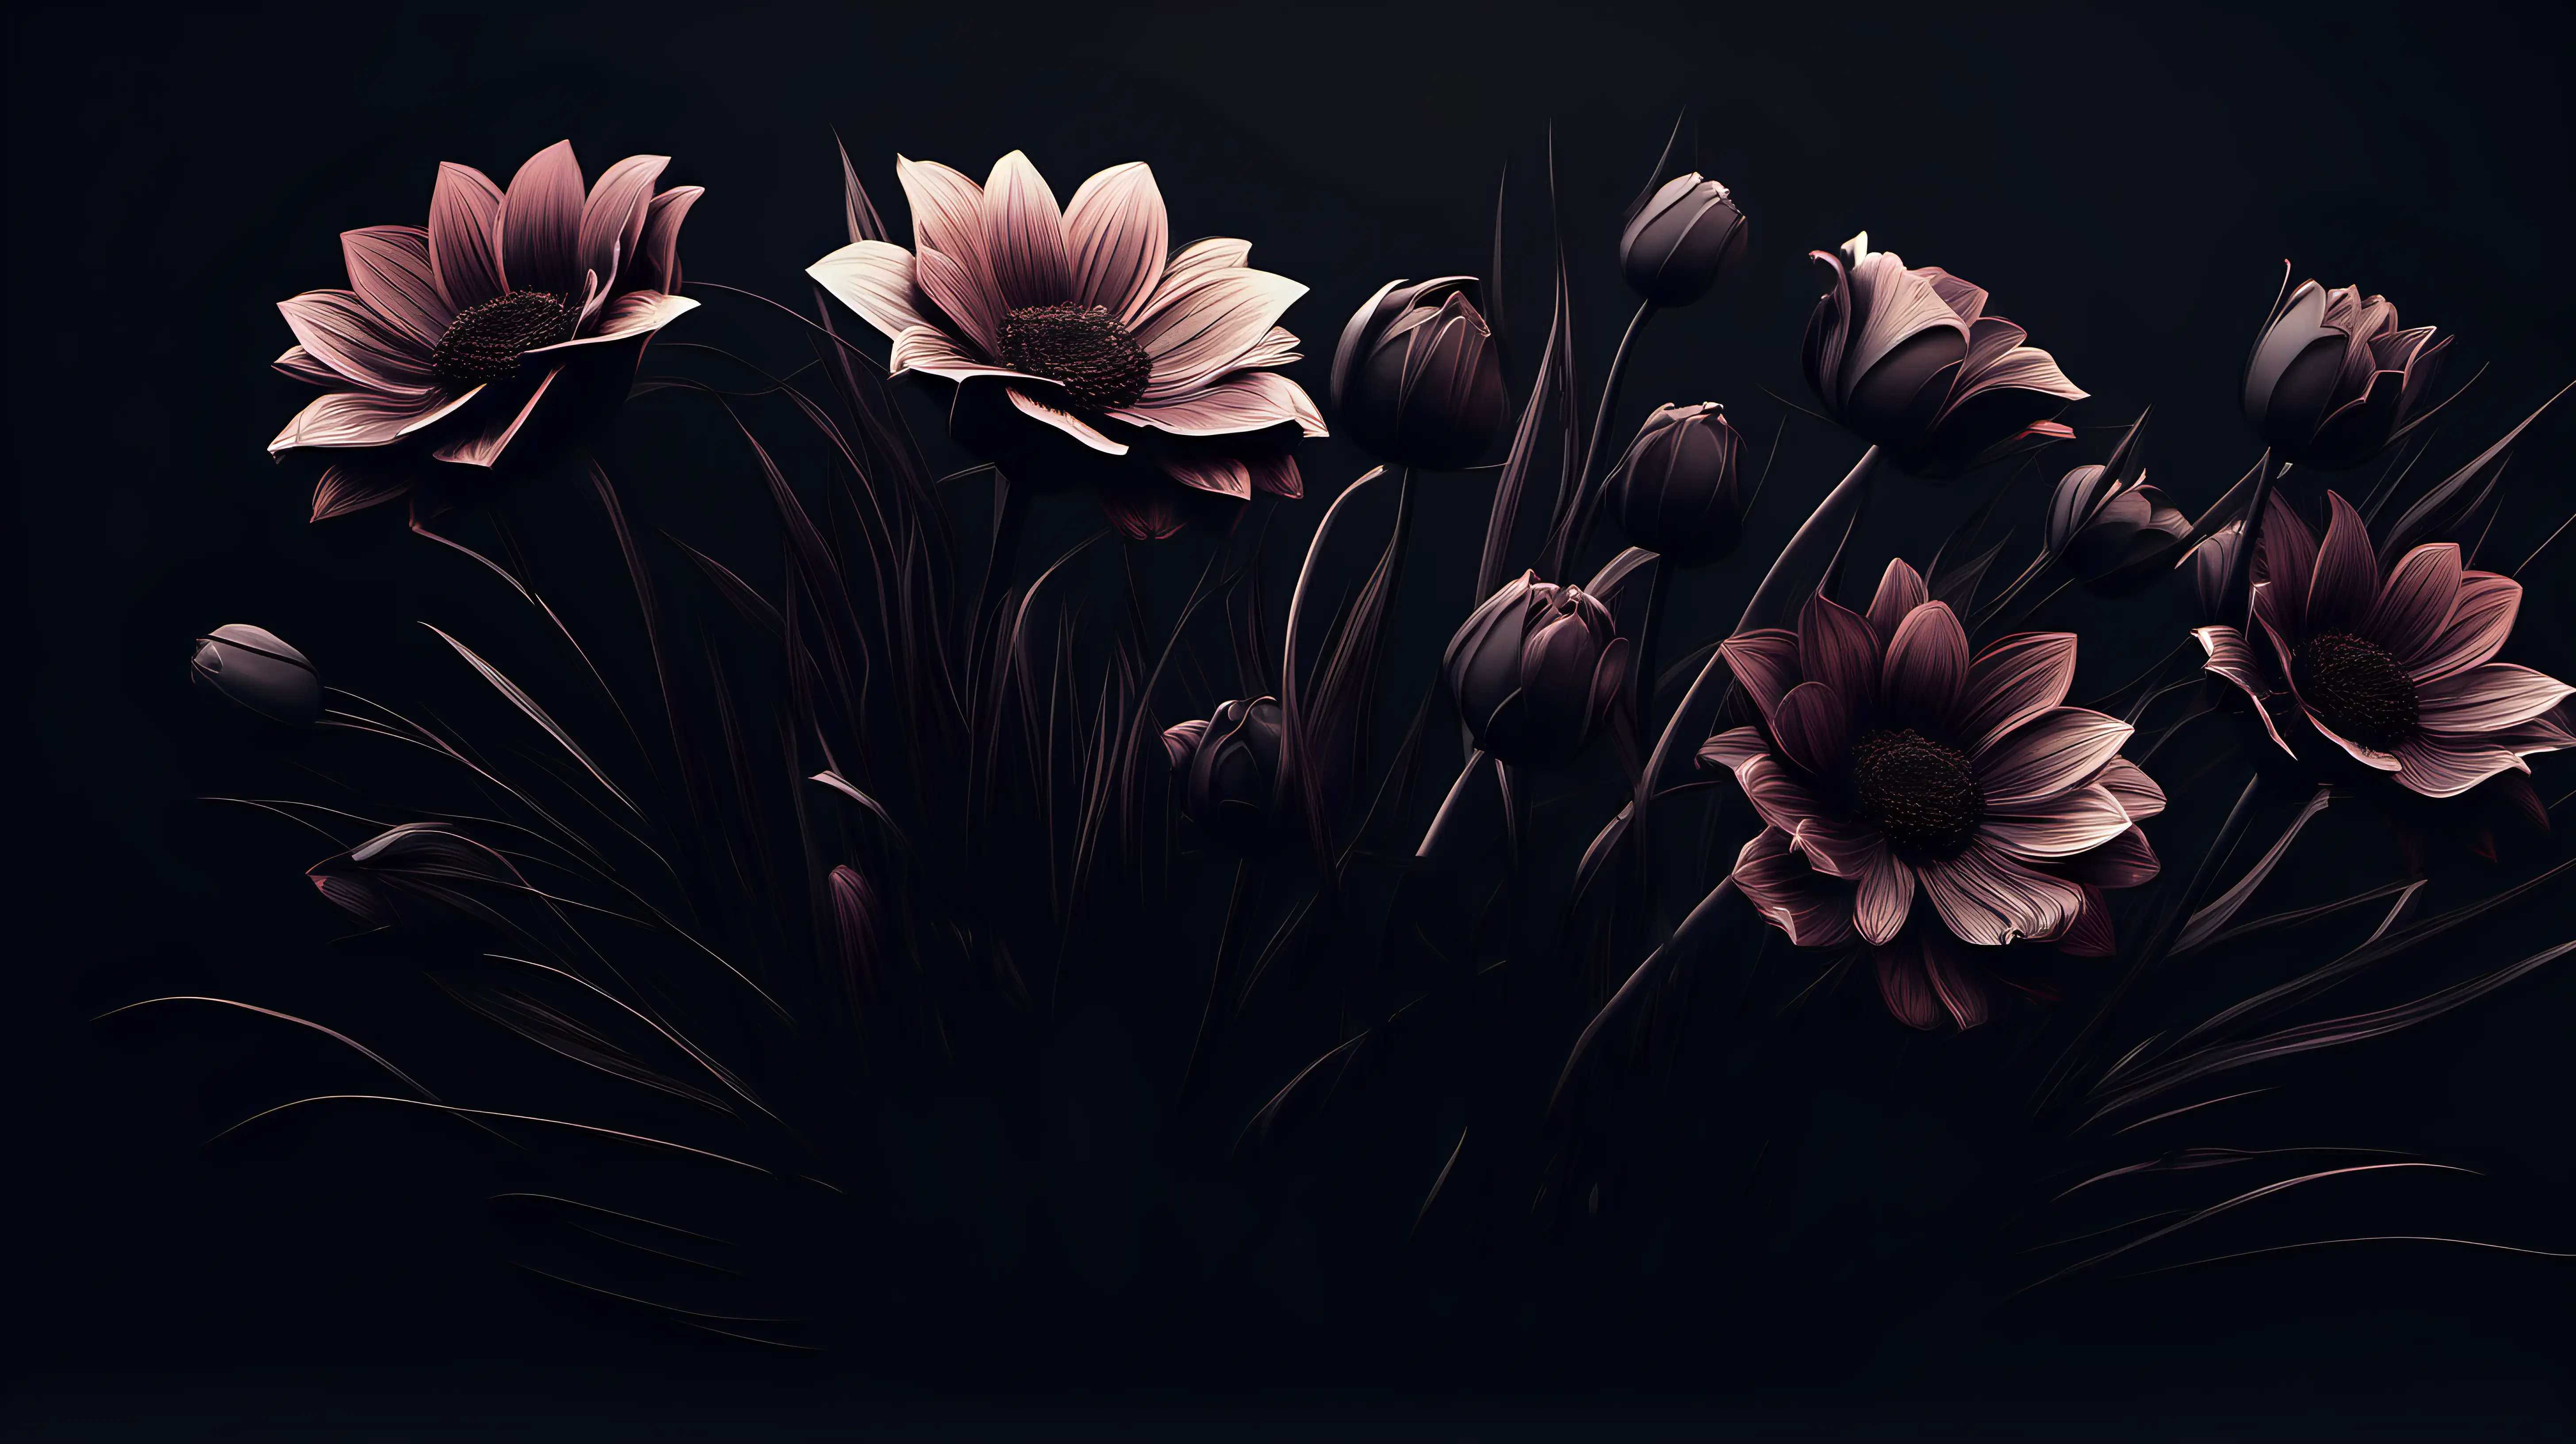 Elegant Dark Floral Arrangement Artistic Flowers in a Rich Color Palette